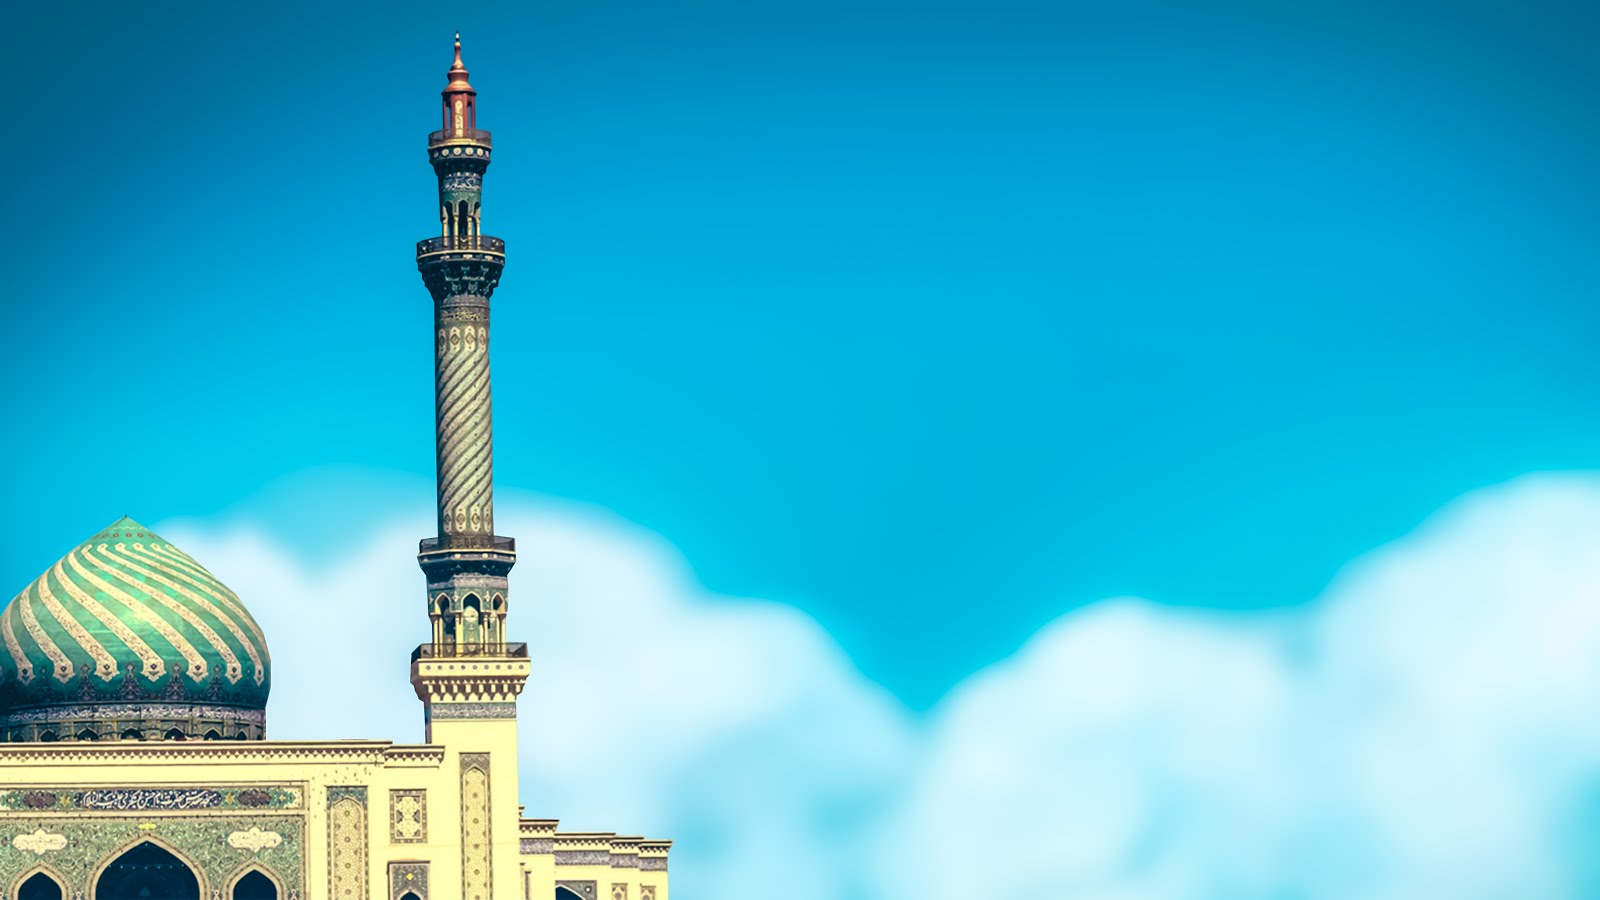 Wallpaper Hd Kumpulan Gambar Pemandangan Masjid Terbaru 40 Trend - Riset